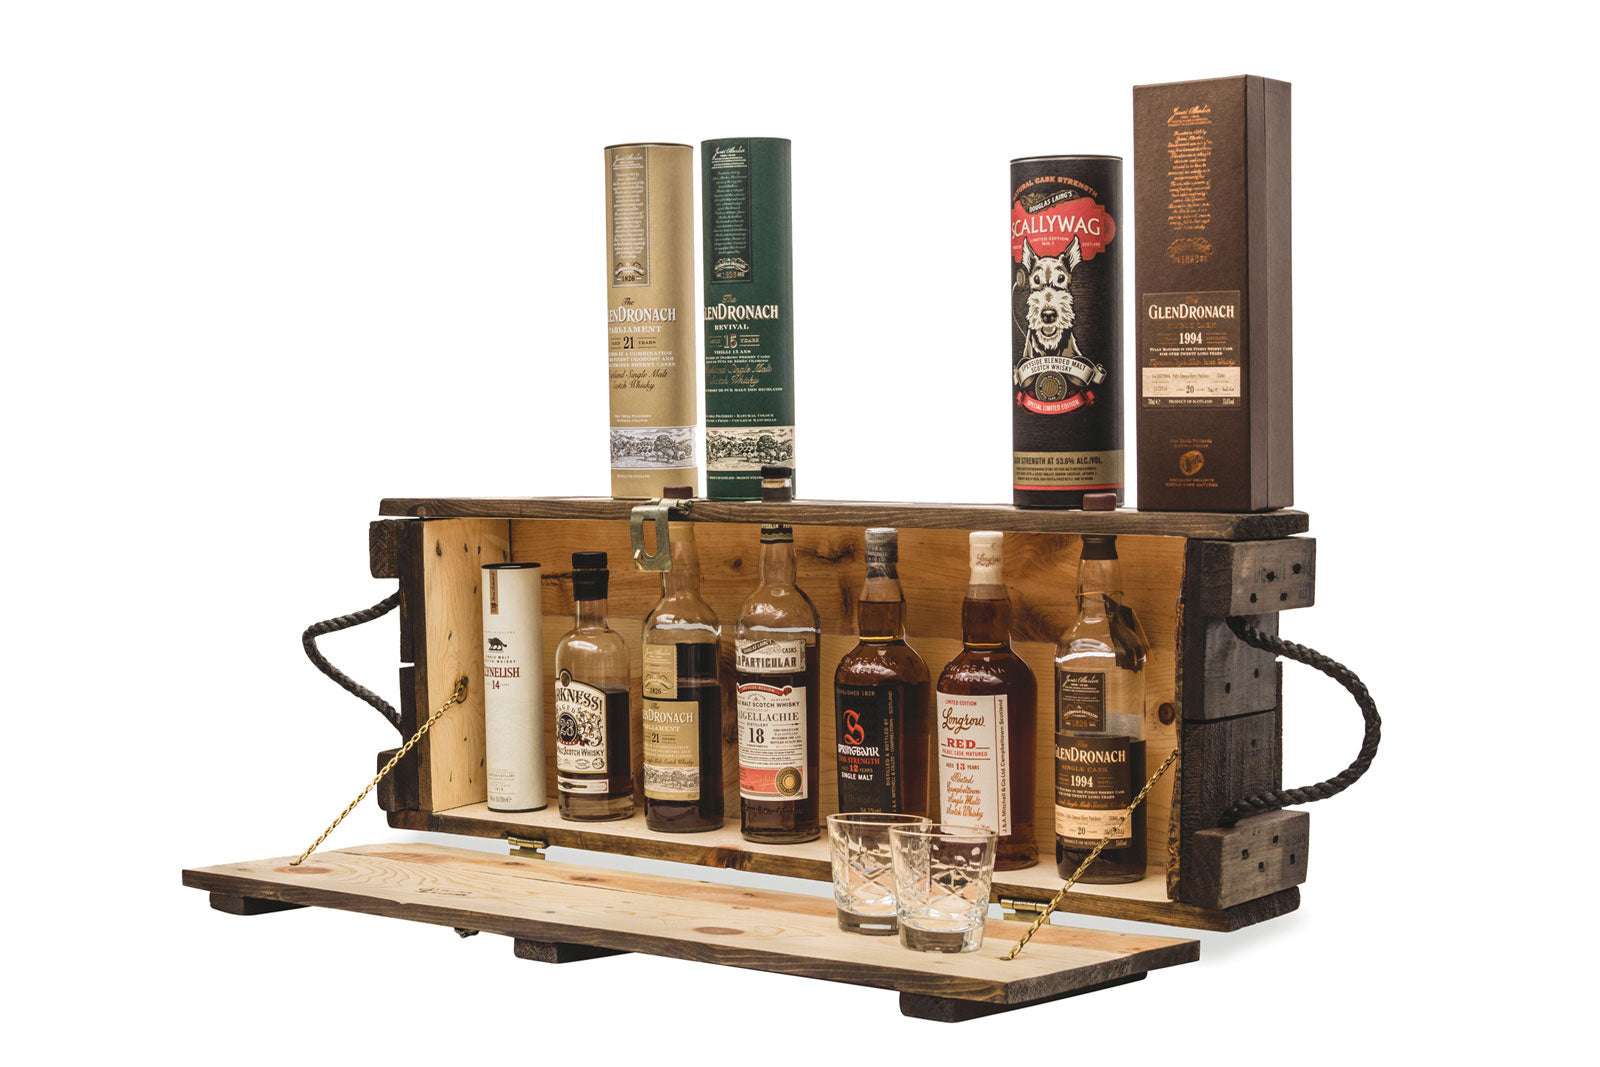 Whiskey bar | Wood Murphy bar | Top shelf whiskey service | Whiskey lovers gift